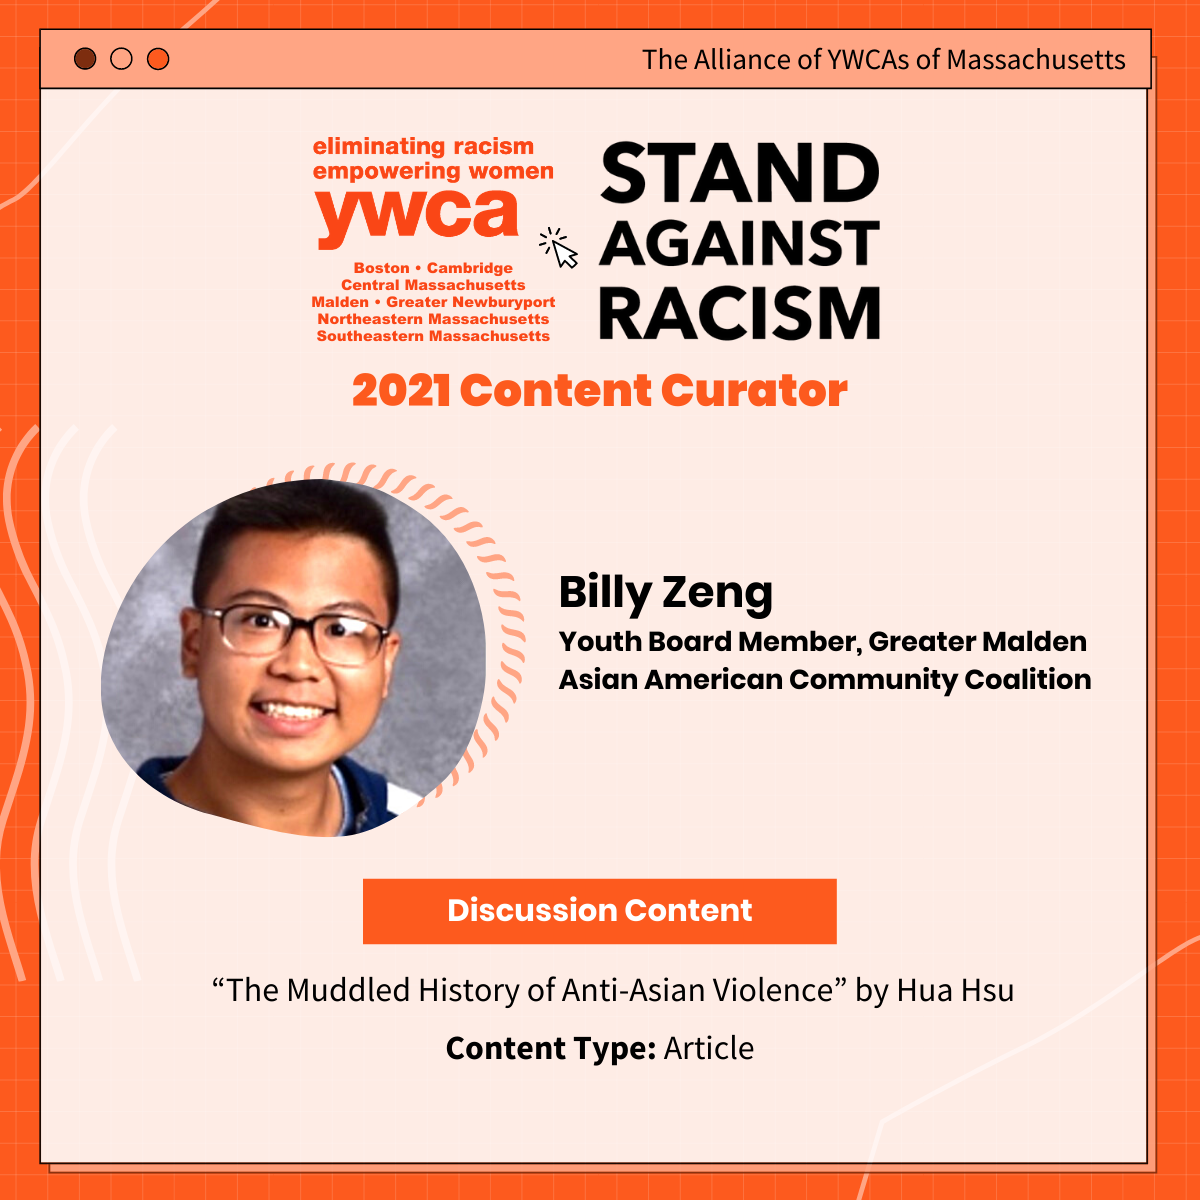 Billy Zeng, Youth Board Member, Greater Malden Asian Community Coalition